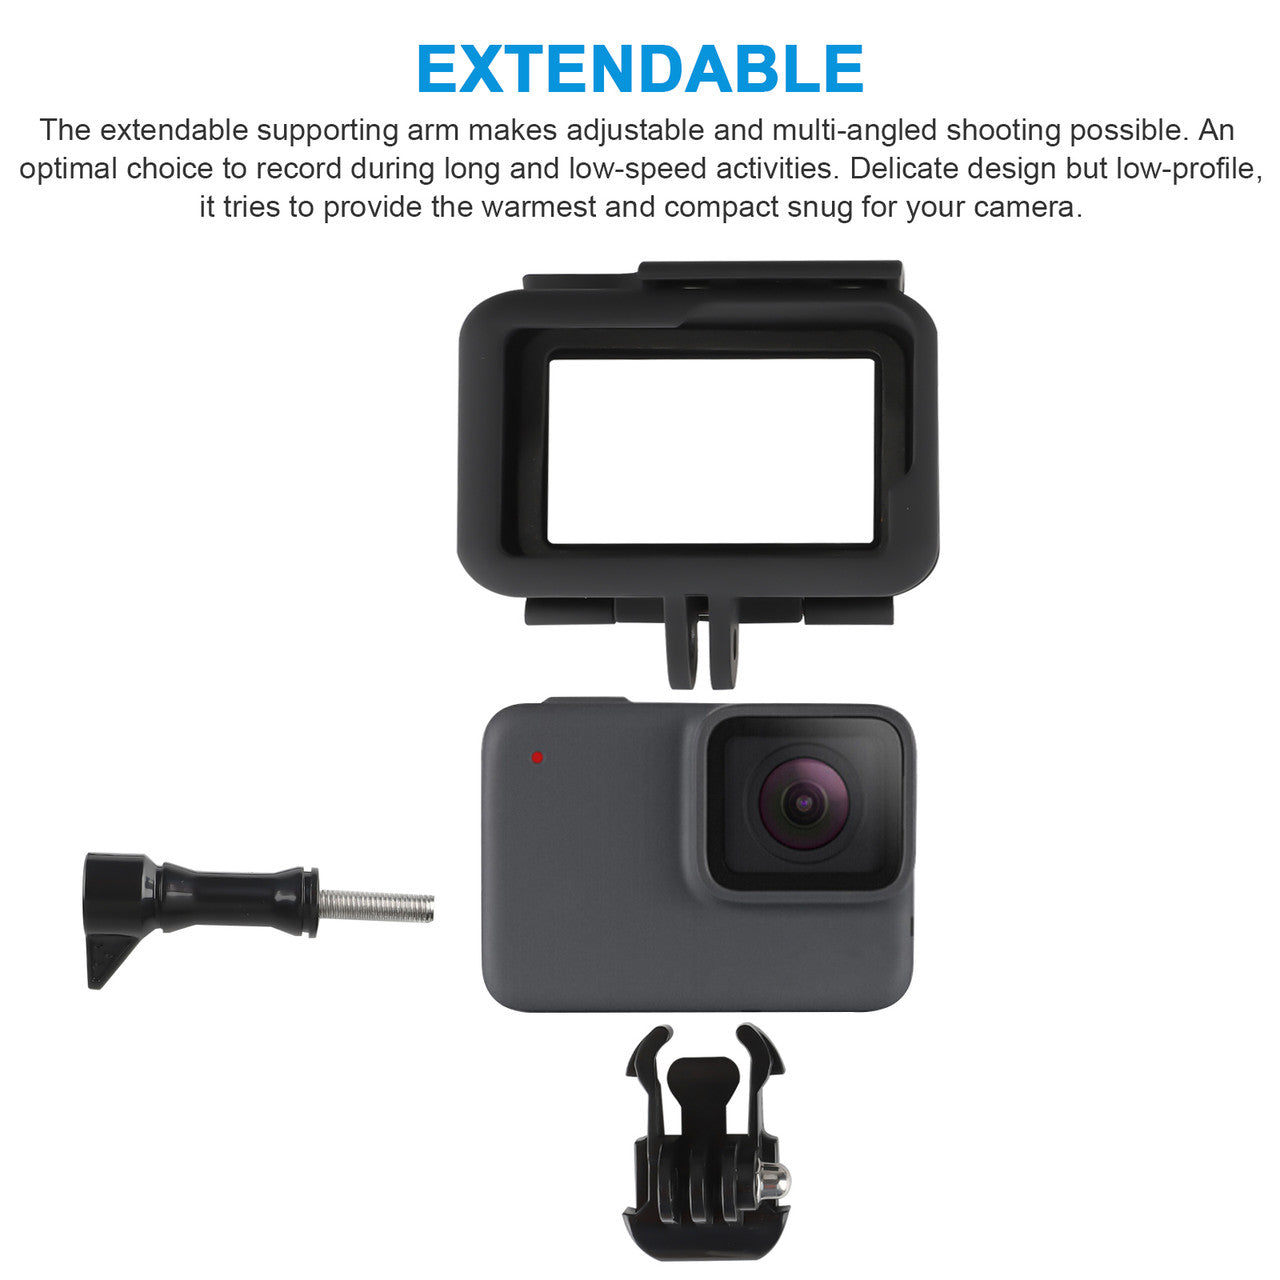 Frame Mount Housing Case Compatible with GoPro Hero 7, Hero 6, Hero 5, Hero (2018) Cameras, Black